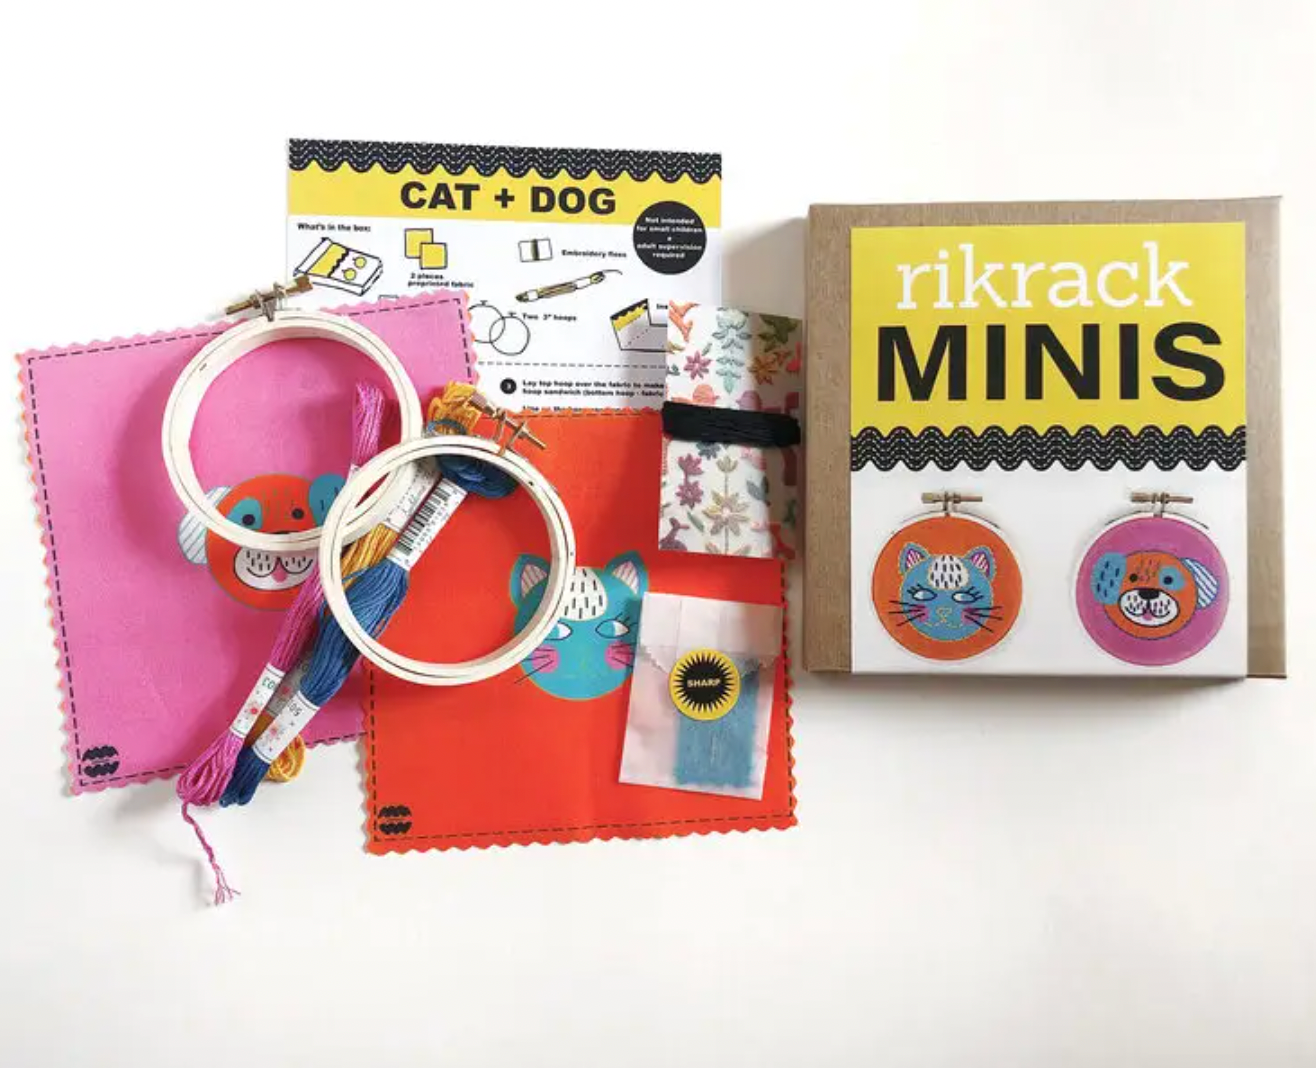 Rikrack- Cat + Dog Minis Embroidery Kit